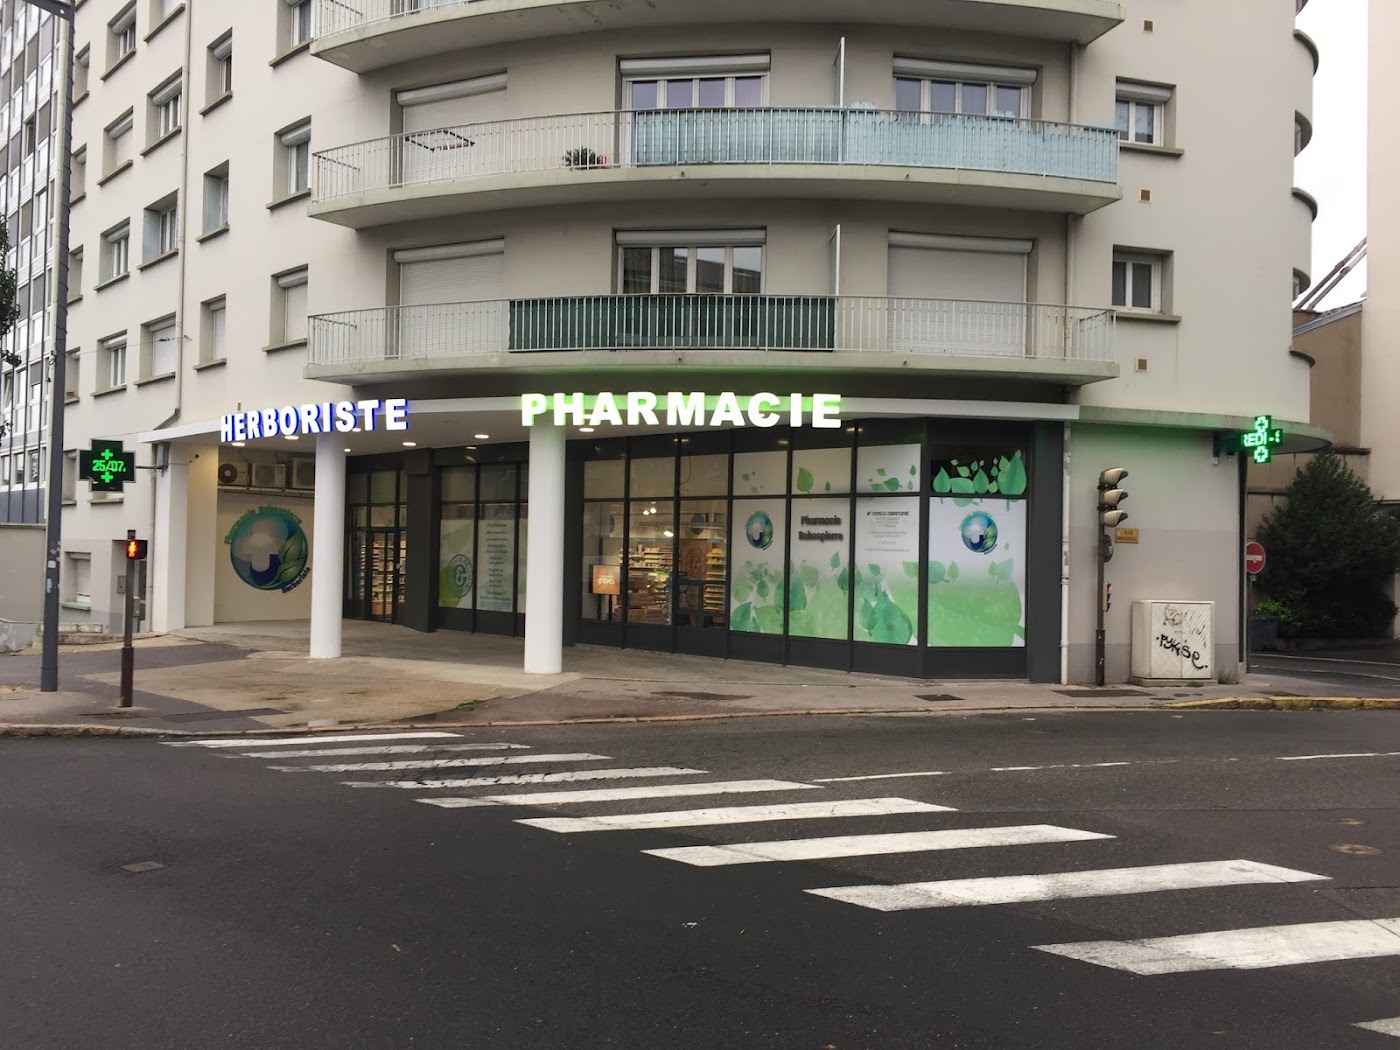 Pharmacie Robespierre-Herboristerie-Totum Pharmacien-Anton et willem